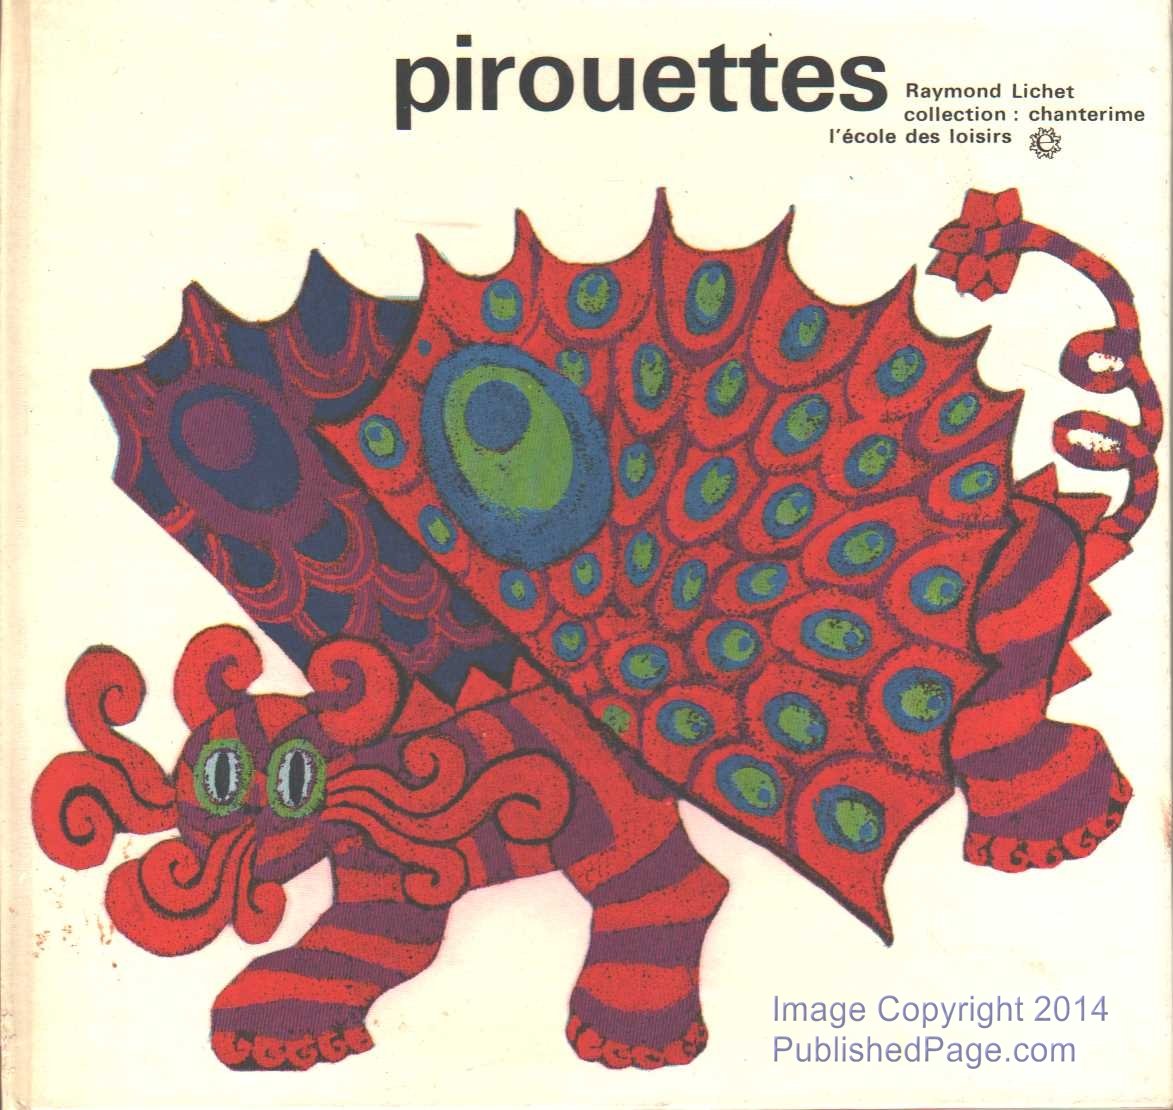 Pirouettes magazine reviews